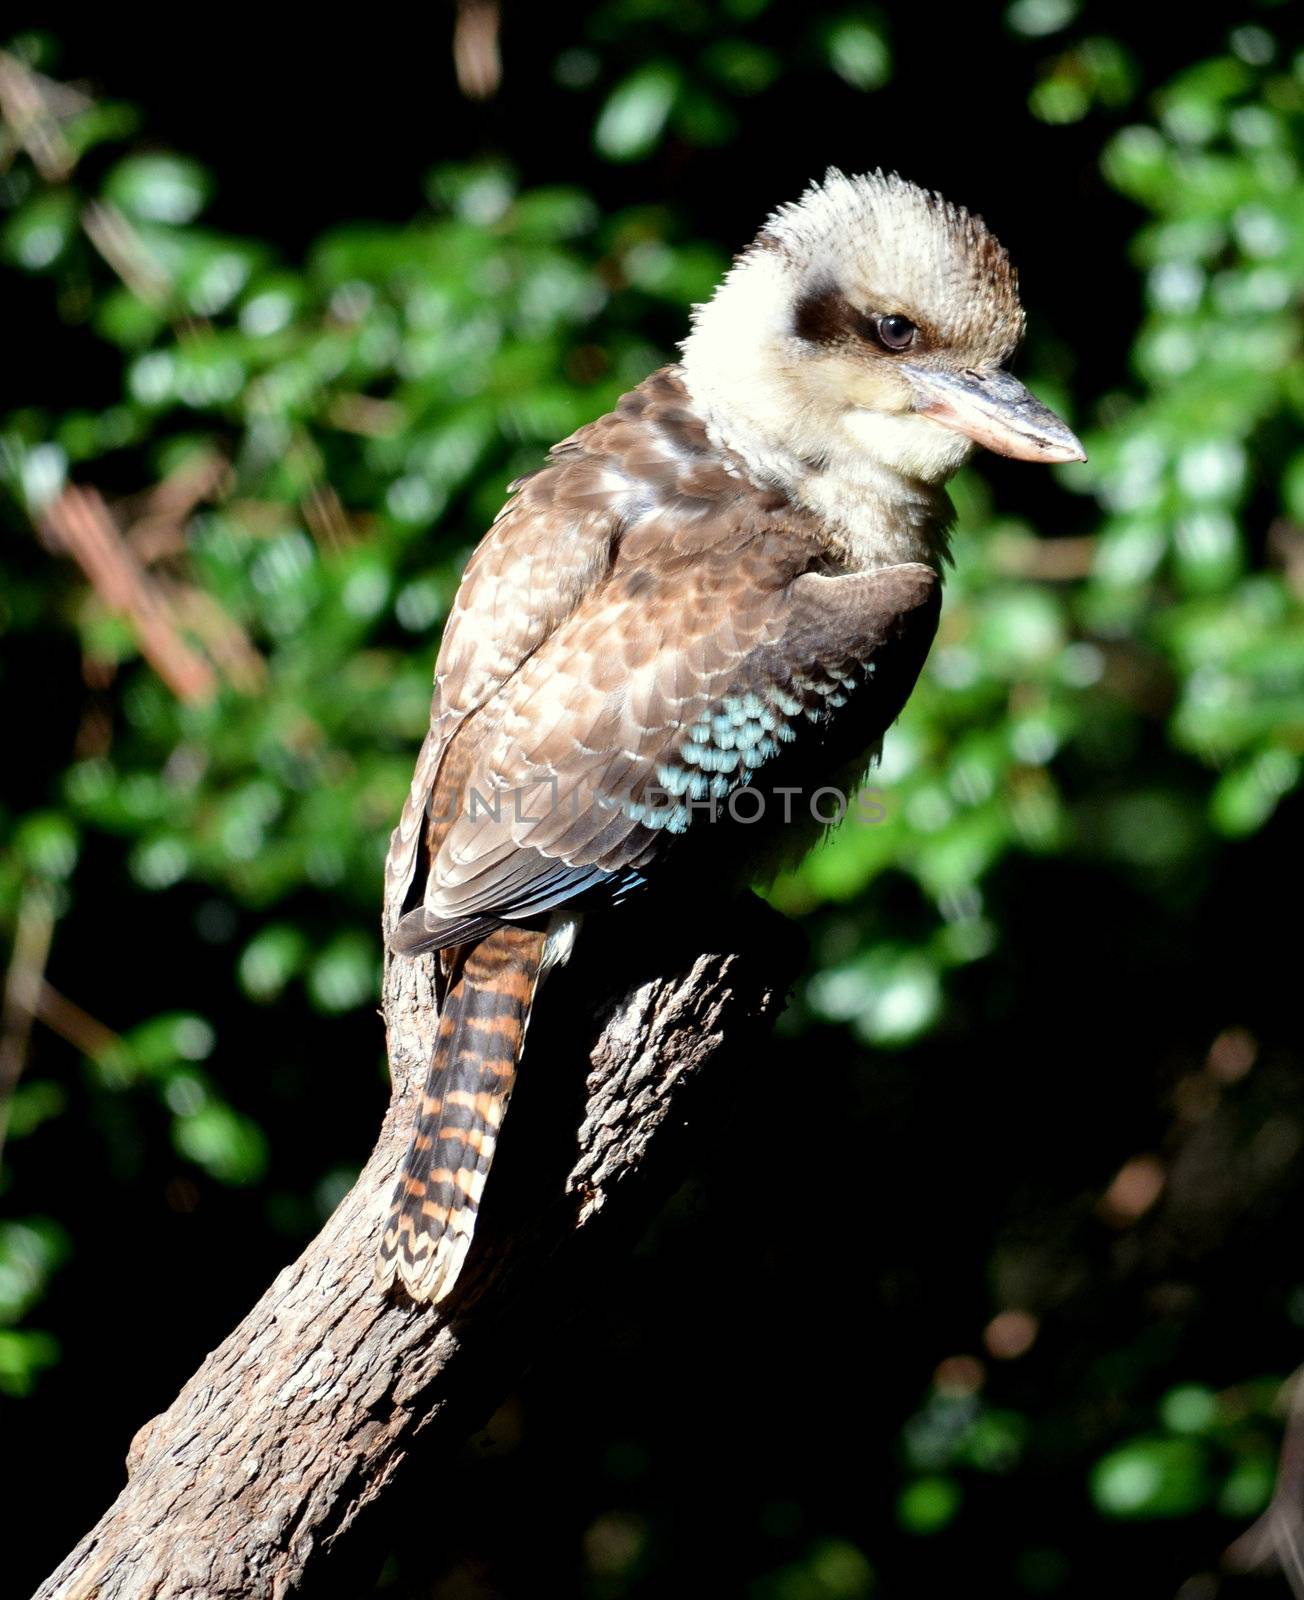 Australian Kookaburra sitting on a tree branch